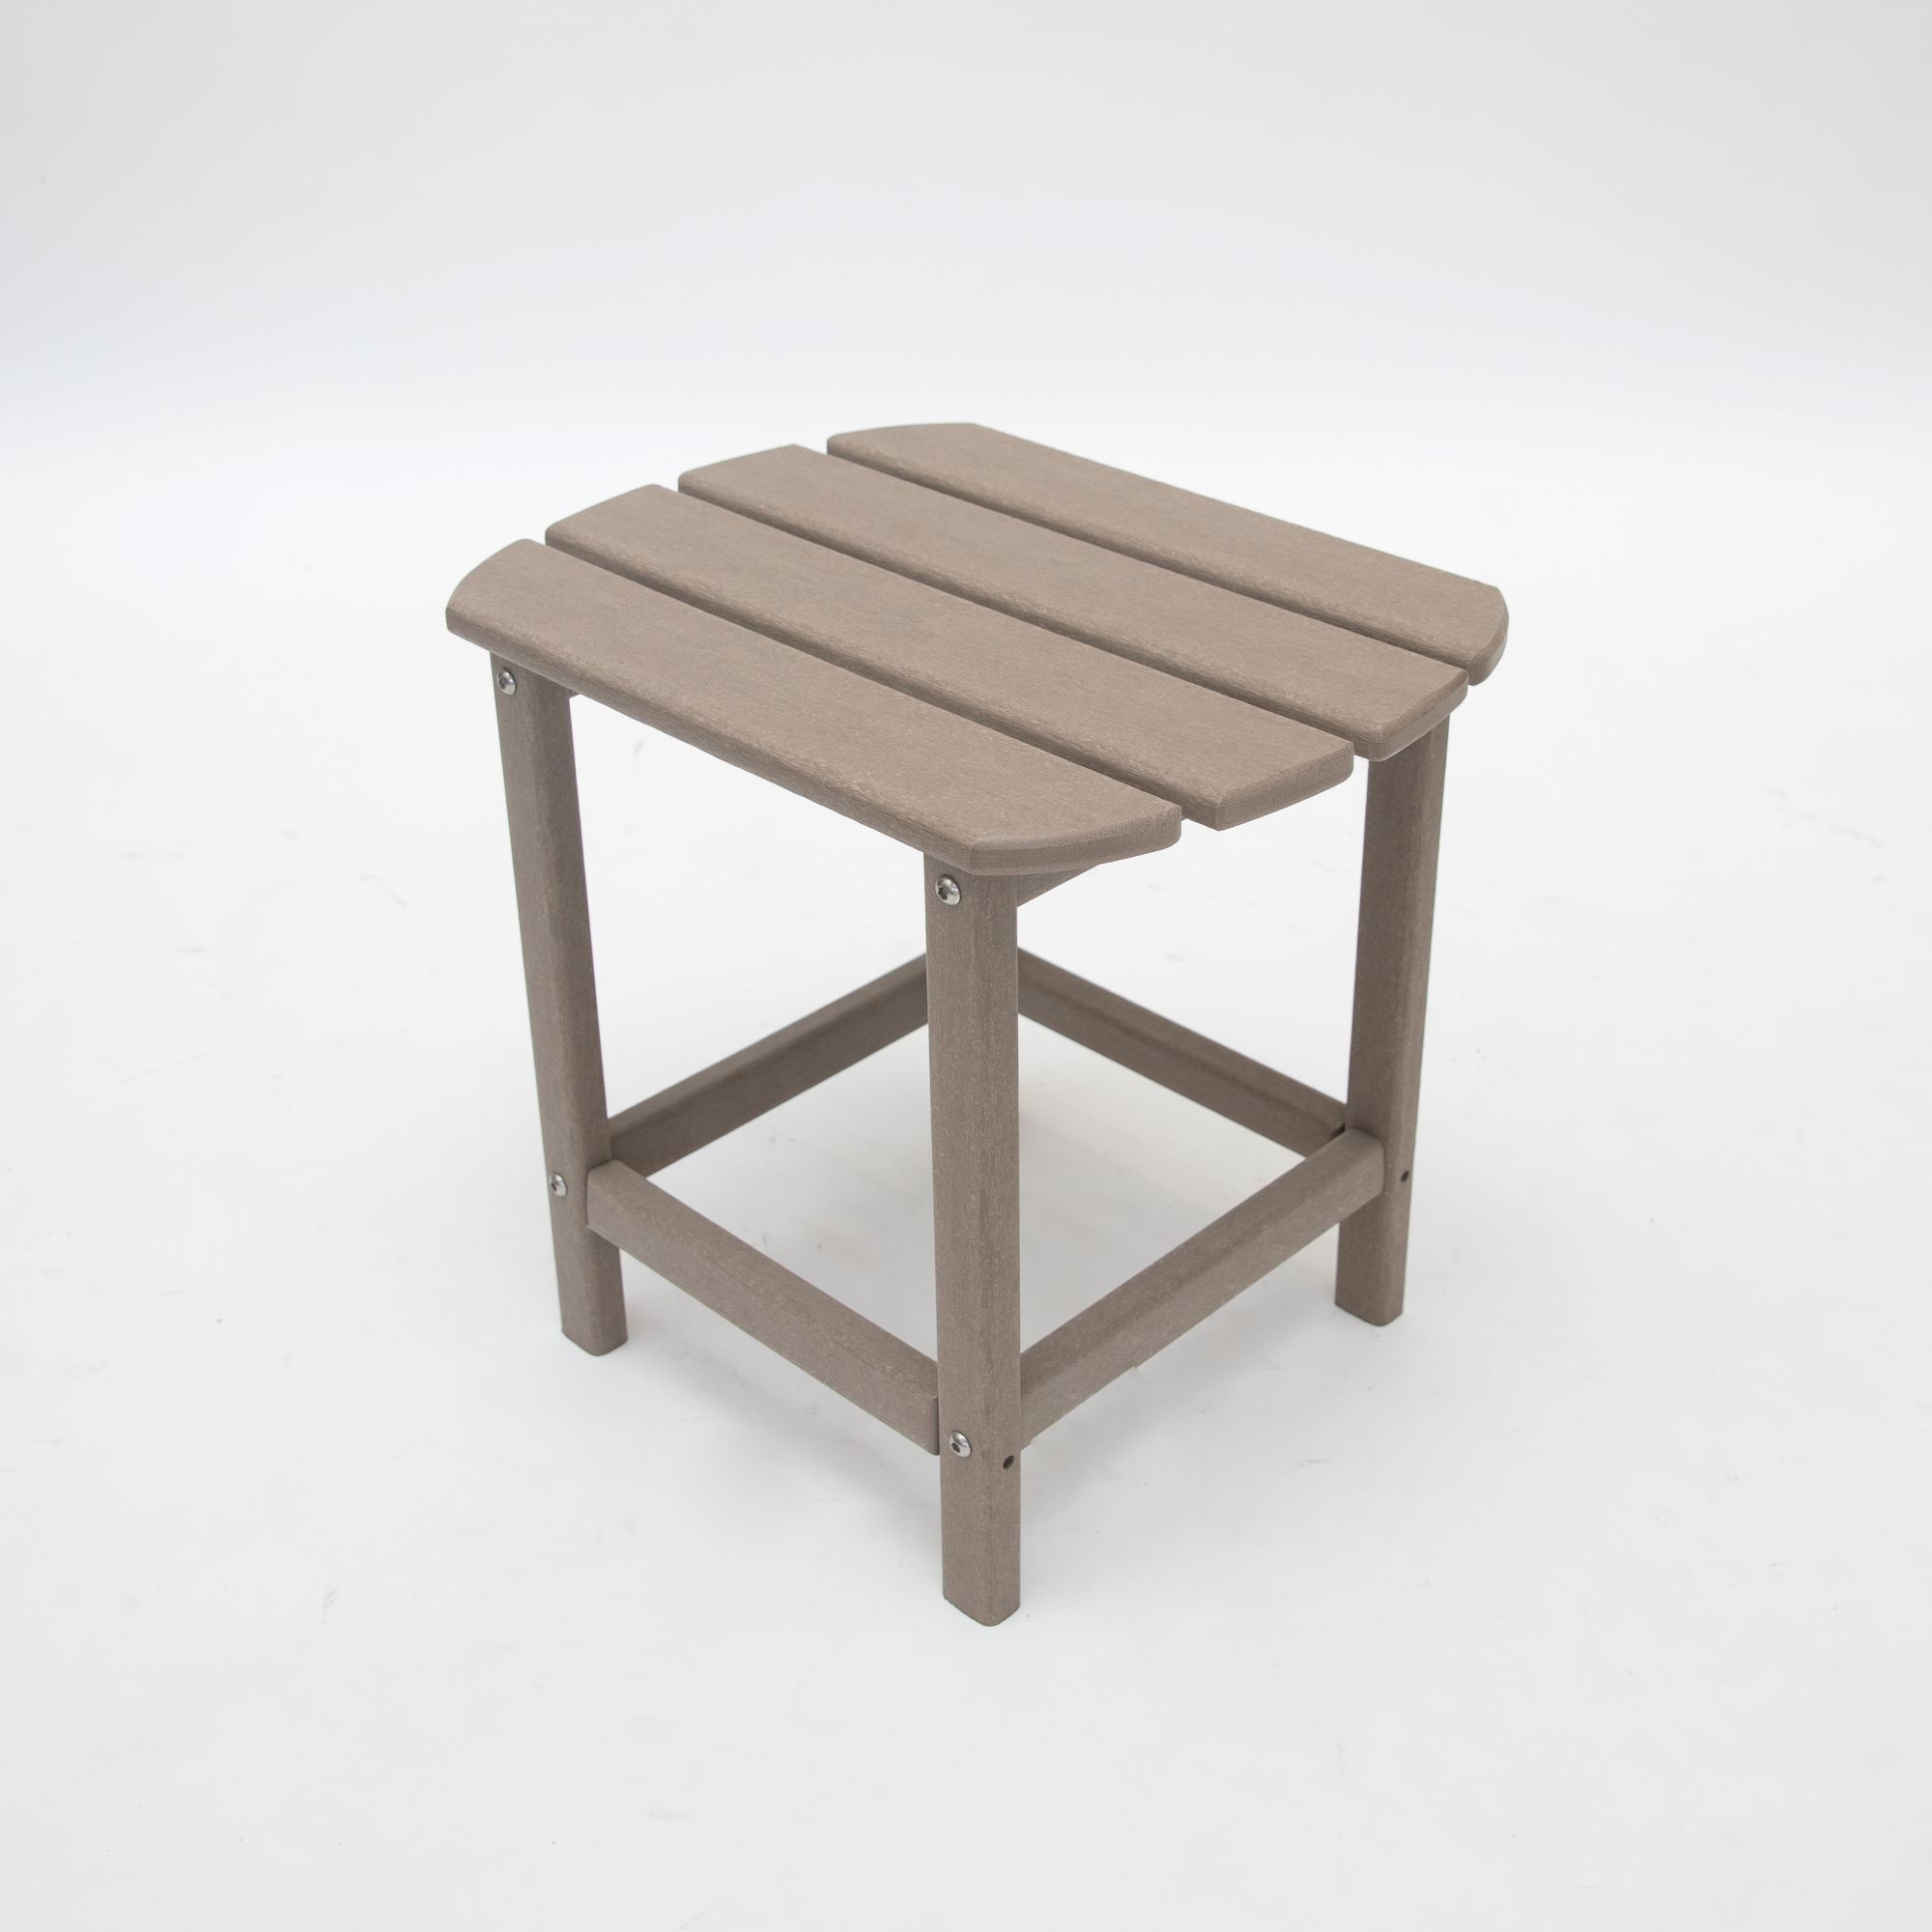 Corona 18" Recycled Plastic Side Table - Weathered Wood - image 4 of 6